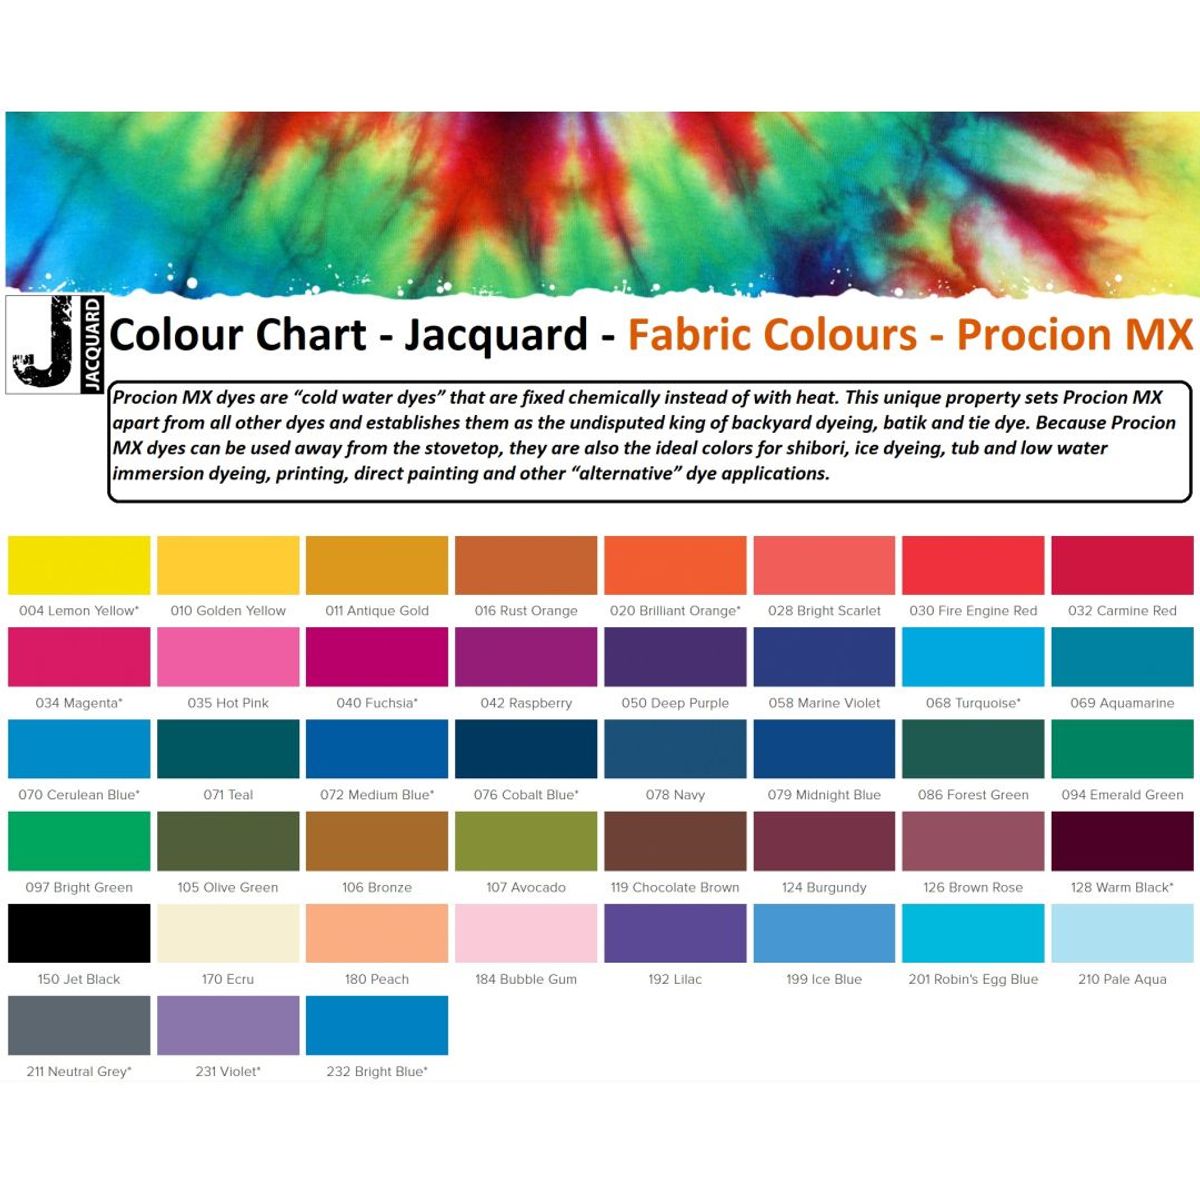 Jacquard - Procion MX Farbstoff-Stoff Textil-Cerulan Blau 070